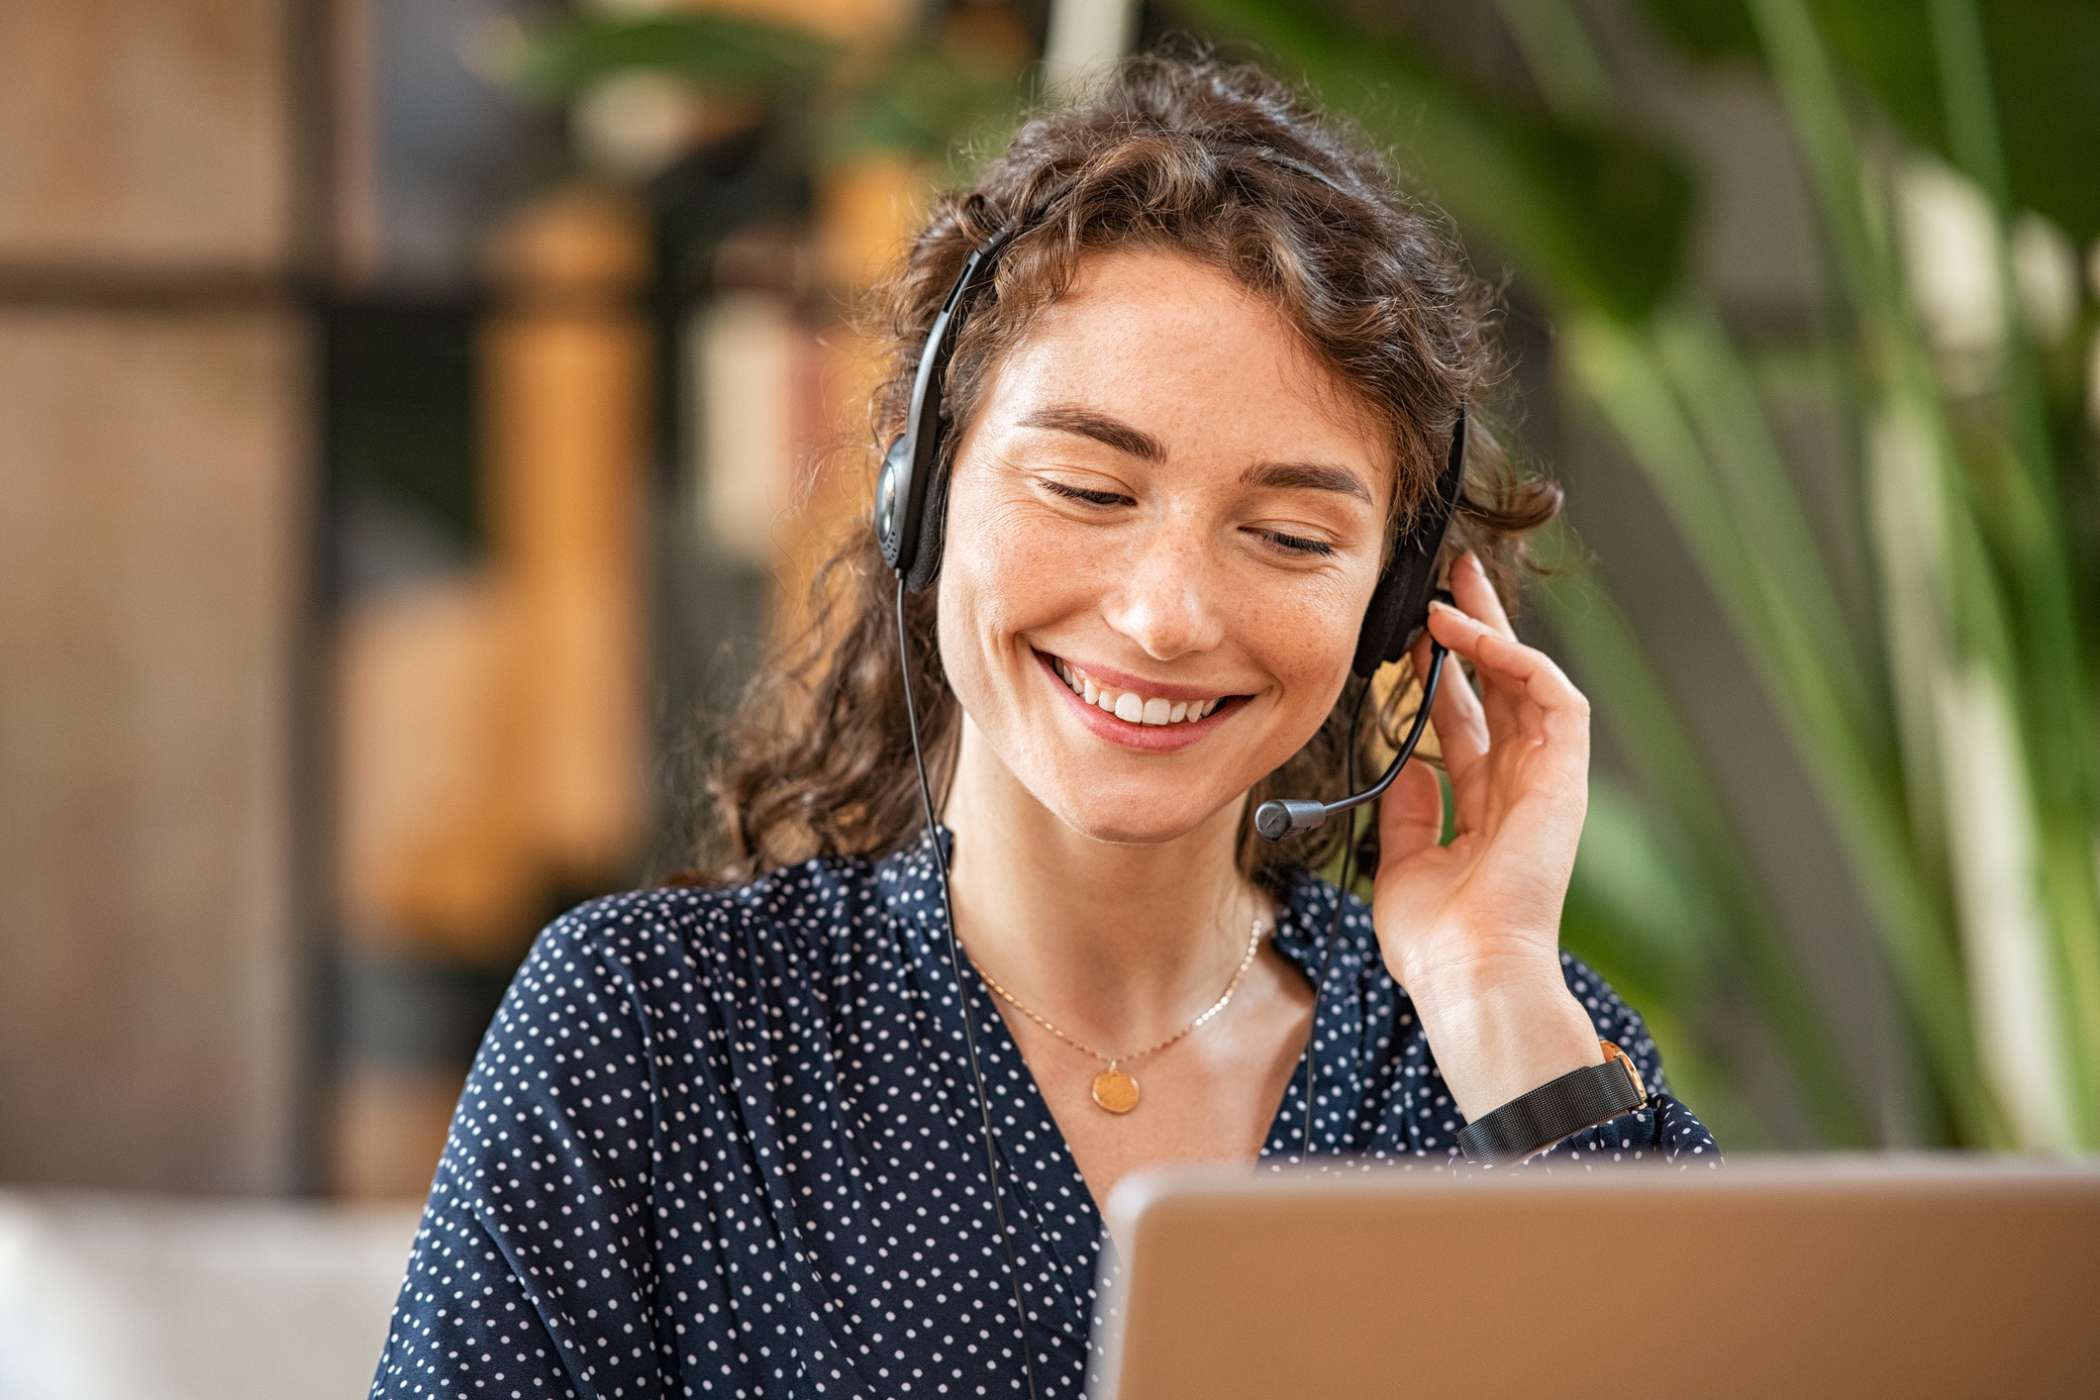 customer service rep answering a call in a telecom company